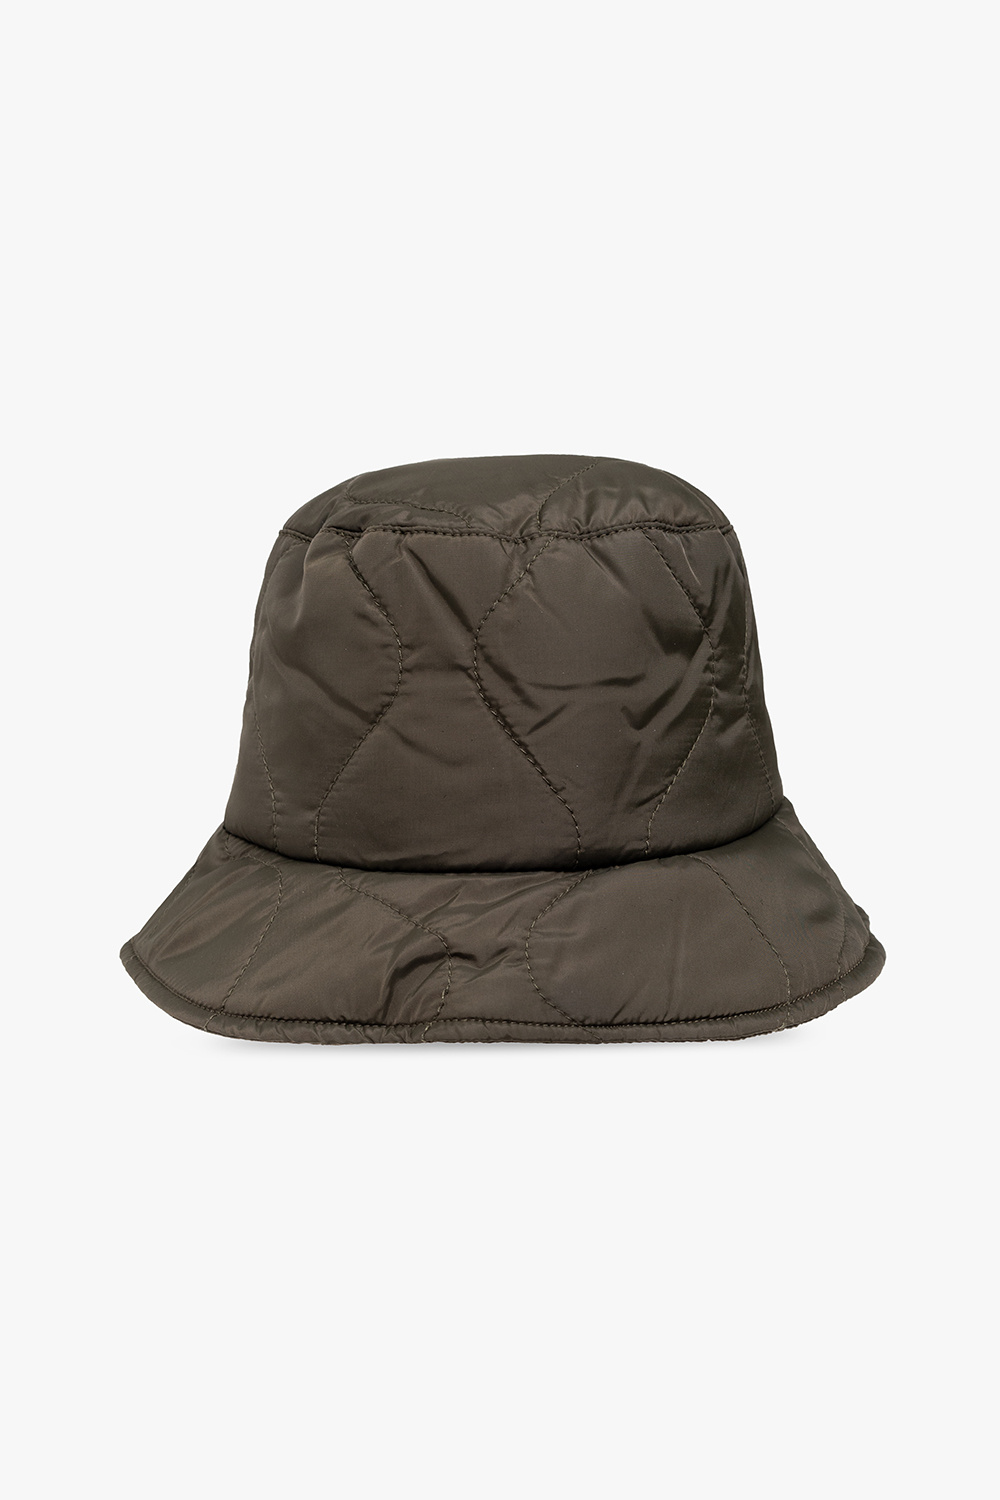 AllSaints burberry letter patch baseball cap item